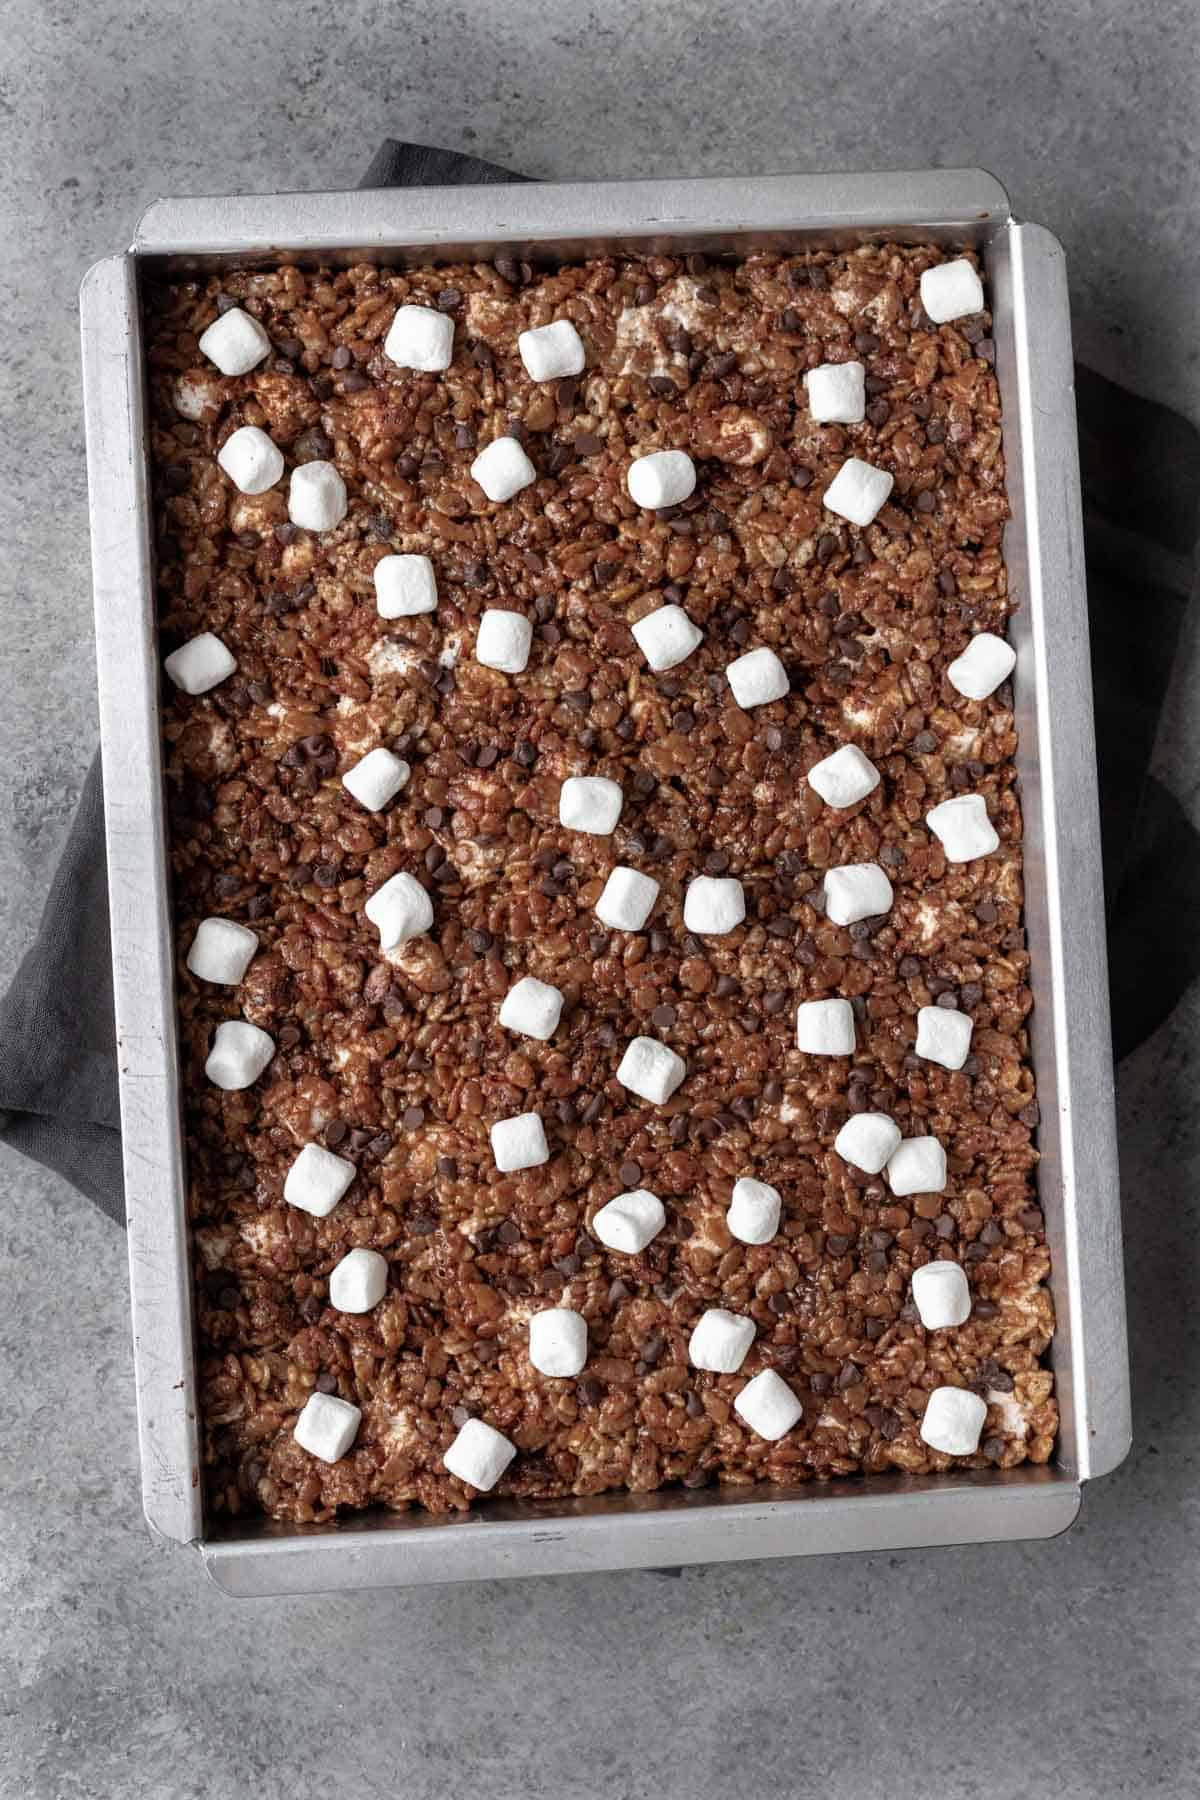 Hot chocolate rice krispie treats in a 9 x 13 baking pan.